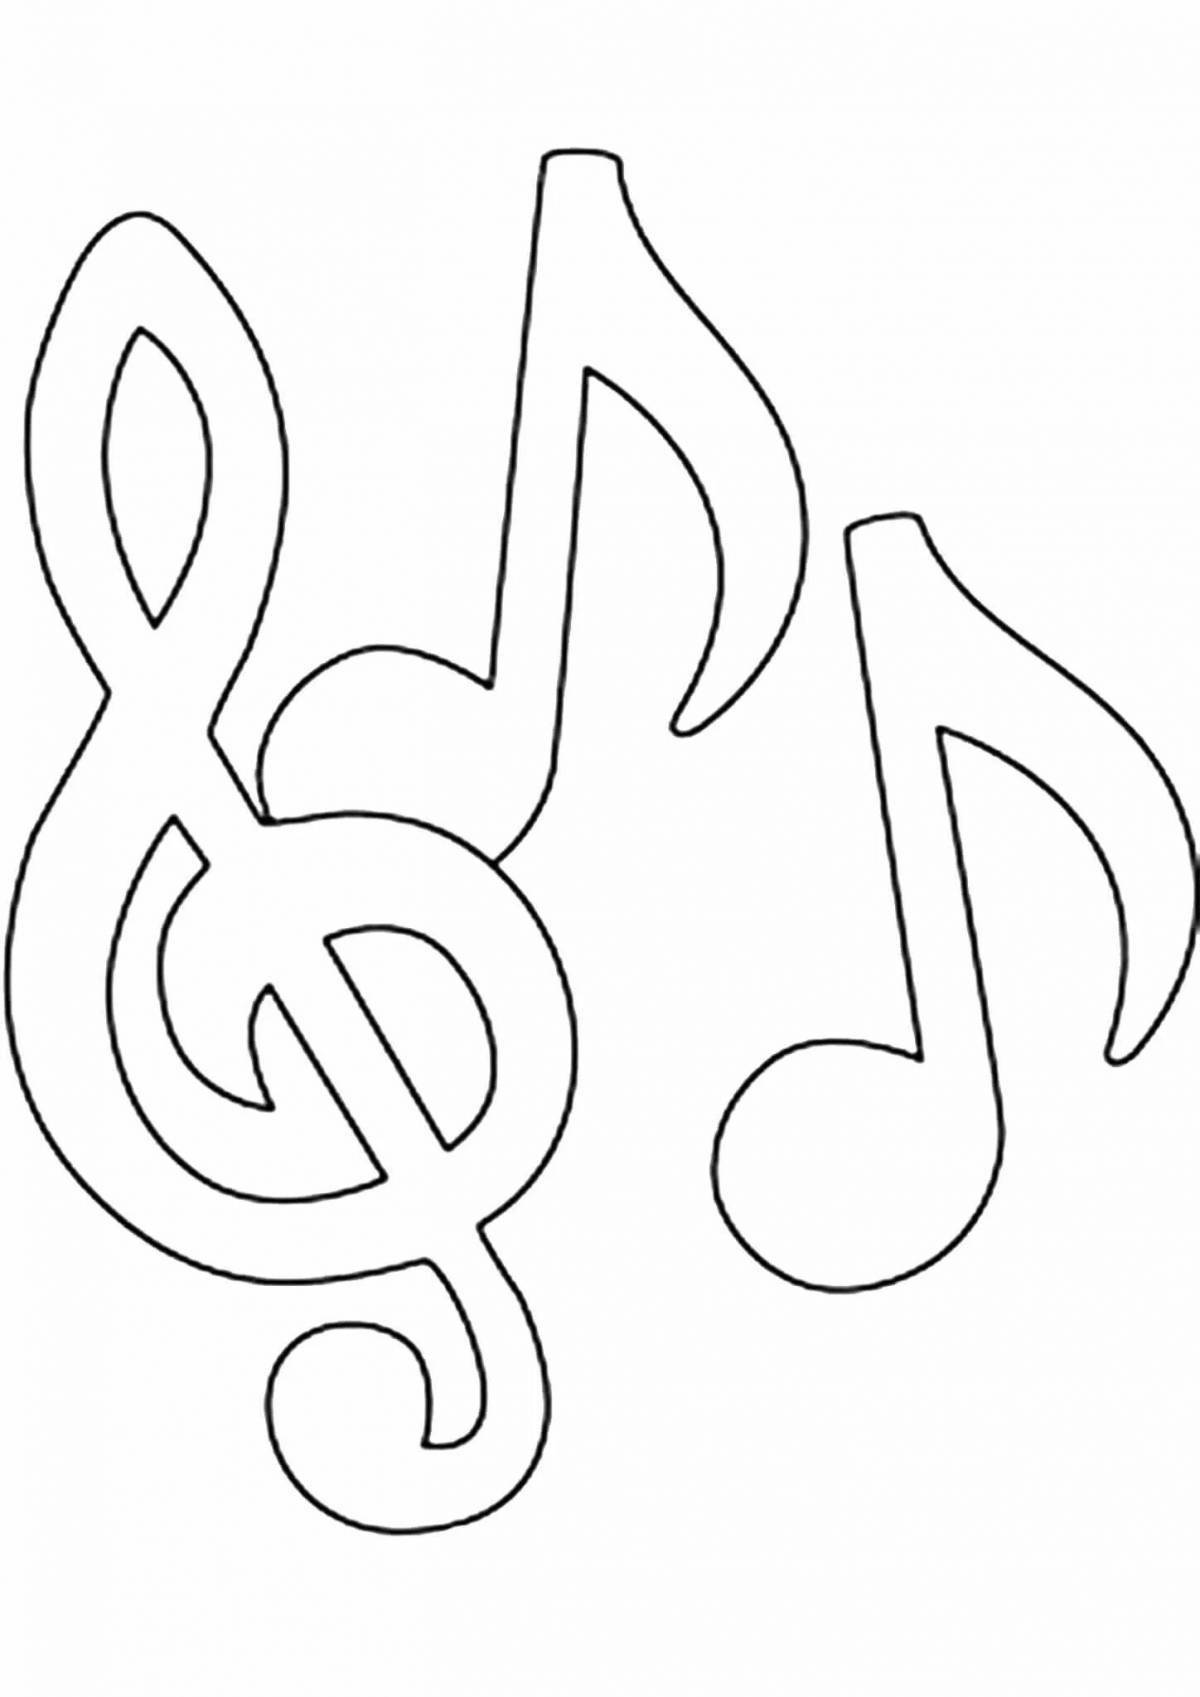 Joyful music coloring for kids